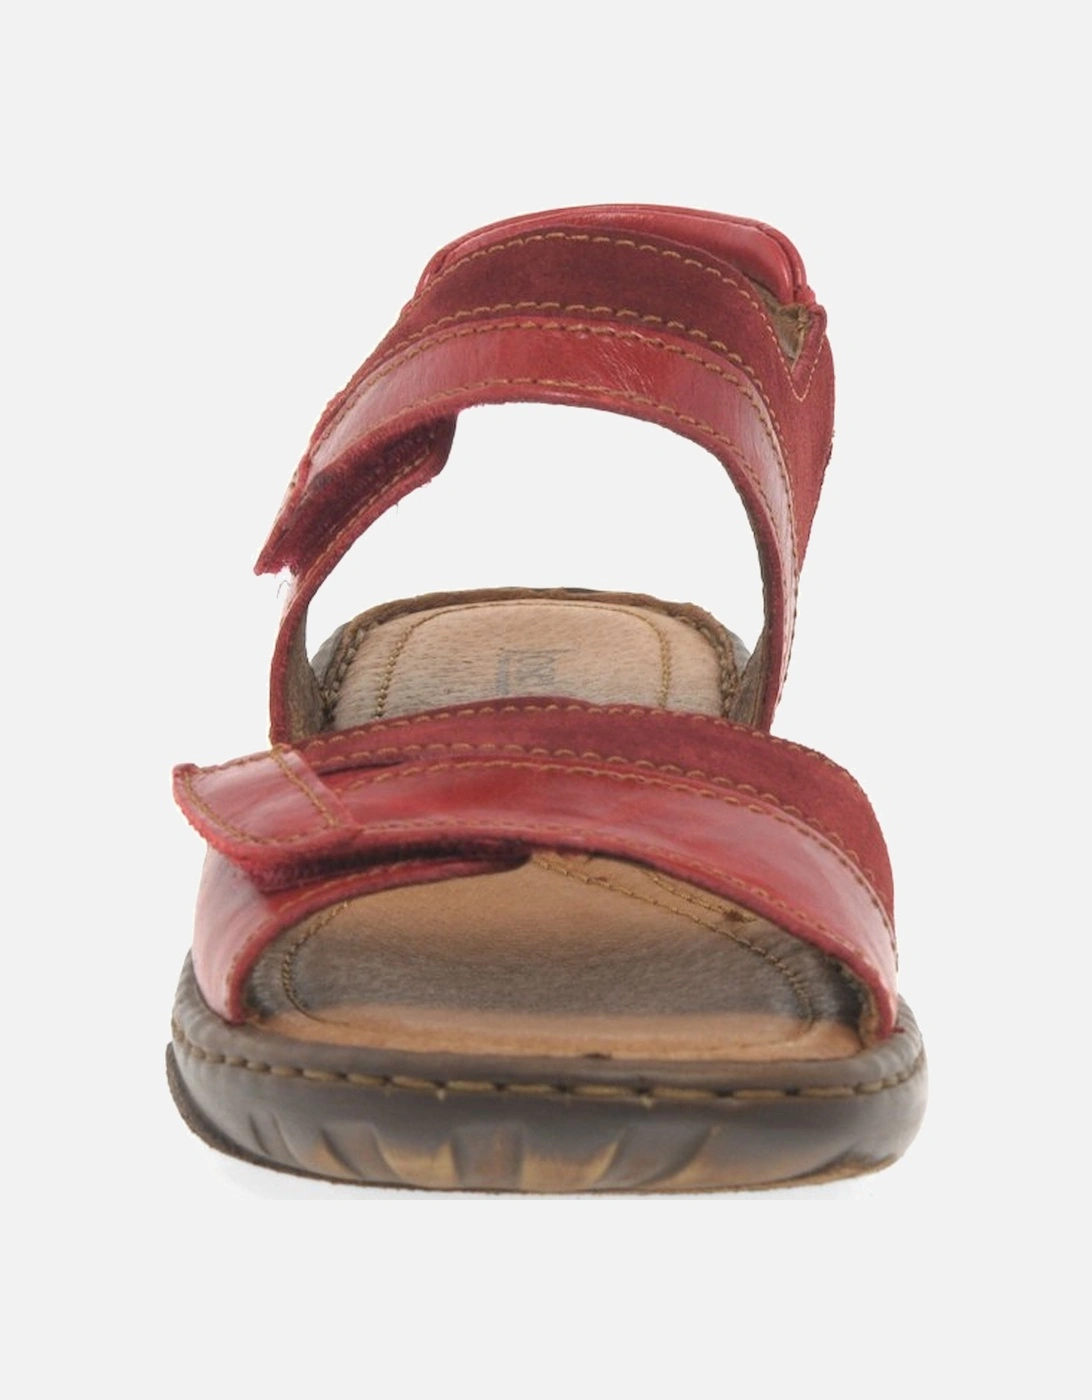 Debra 19 Womens Leather Sandals